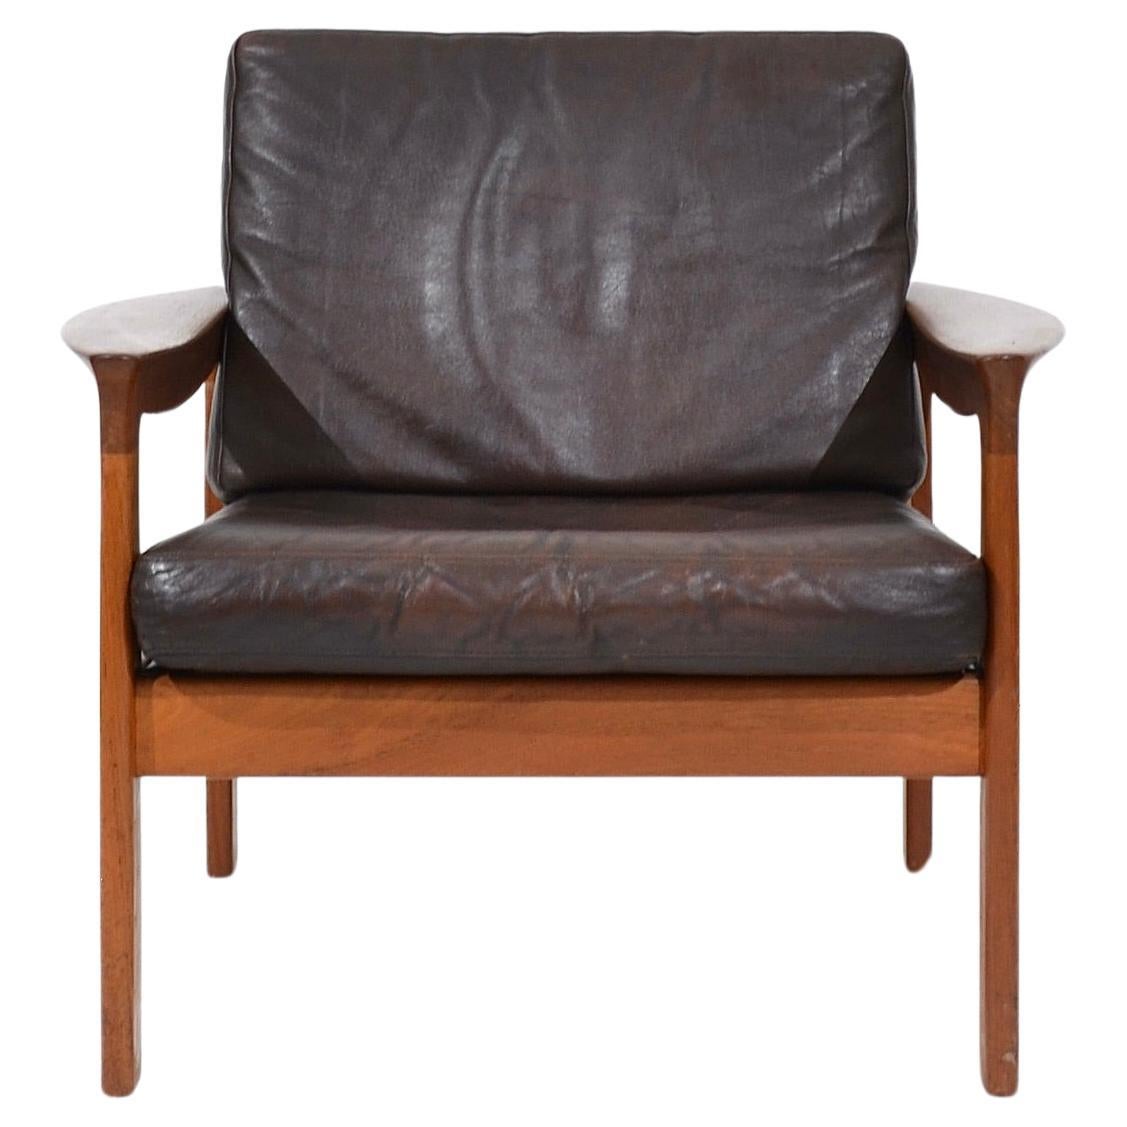 Leather and teak armchair, Arne Wahl Iversen, Komfort, Denmark, 1960's